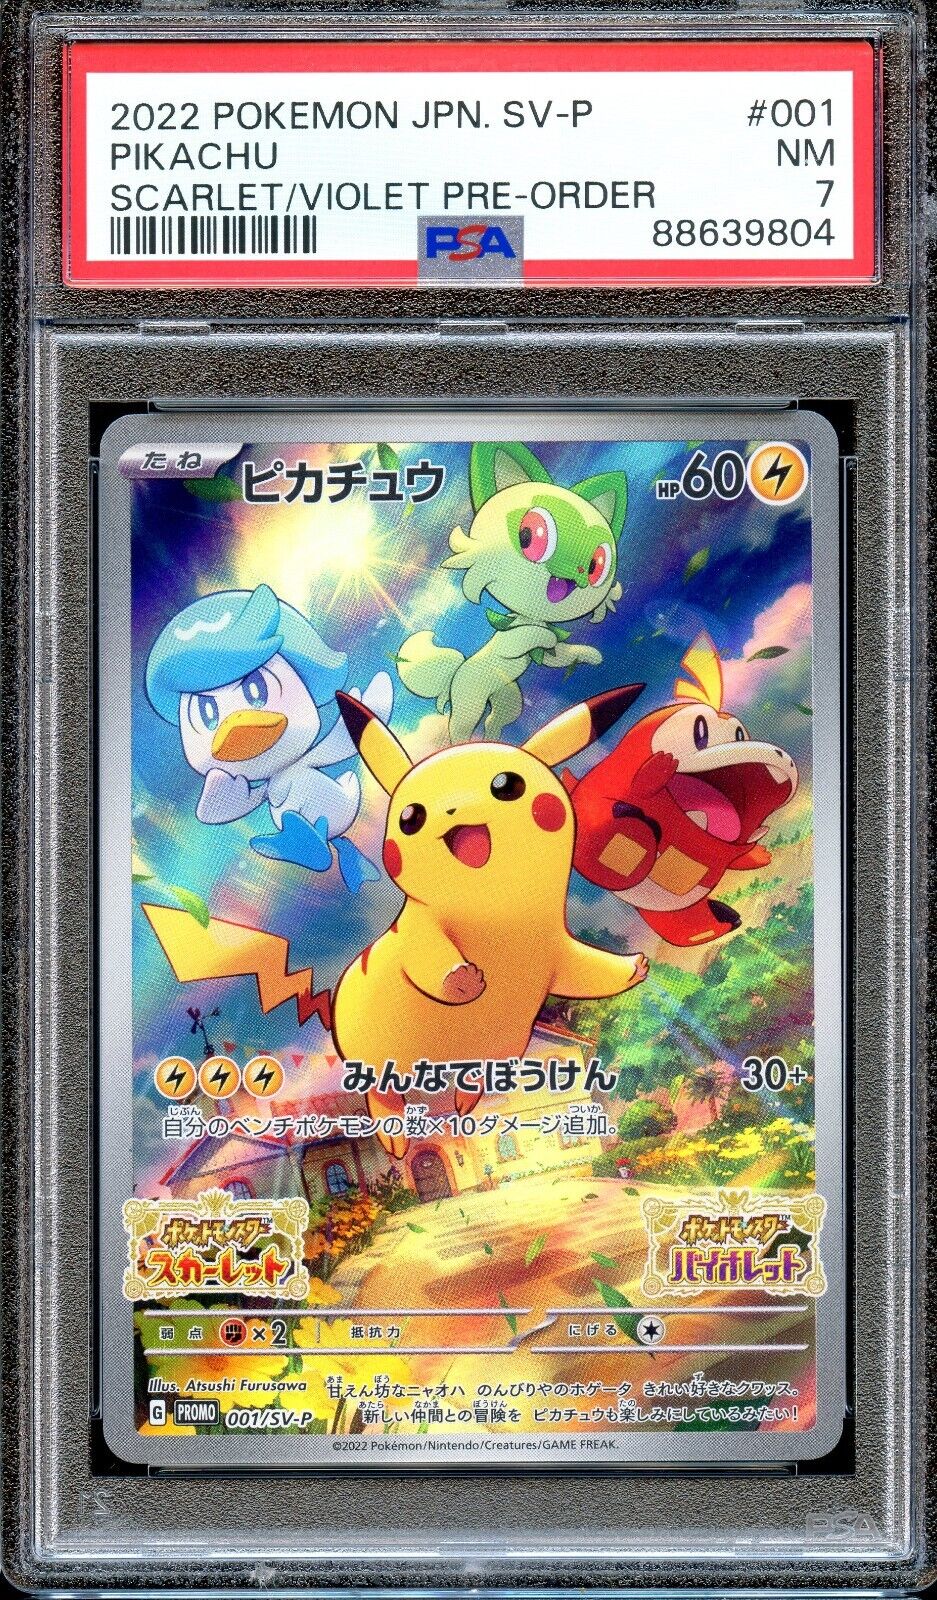 PSA 7 Pikachu 001/SV-P ScarletViolet Pre-Order Promo Japanese Pokemon Card MINT